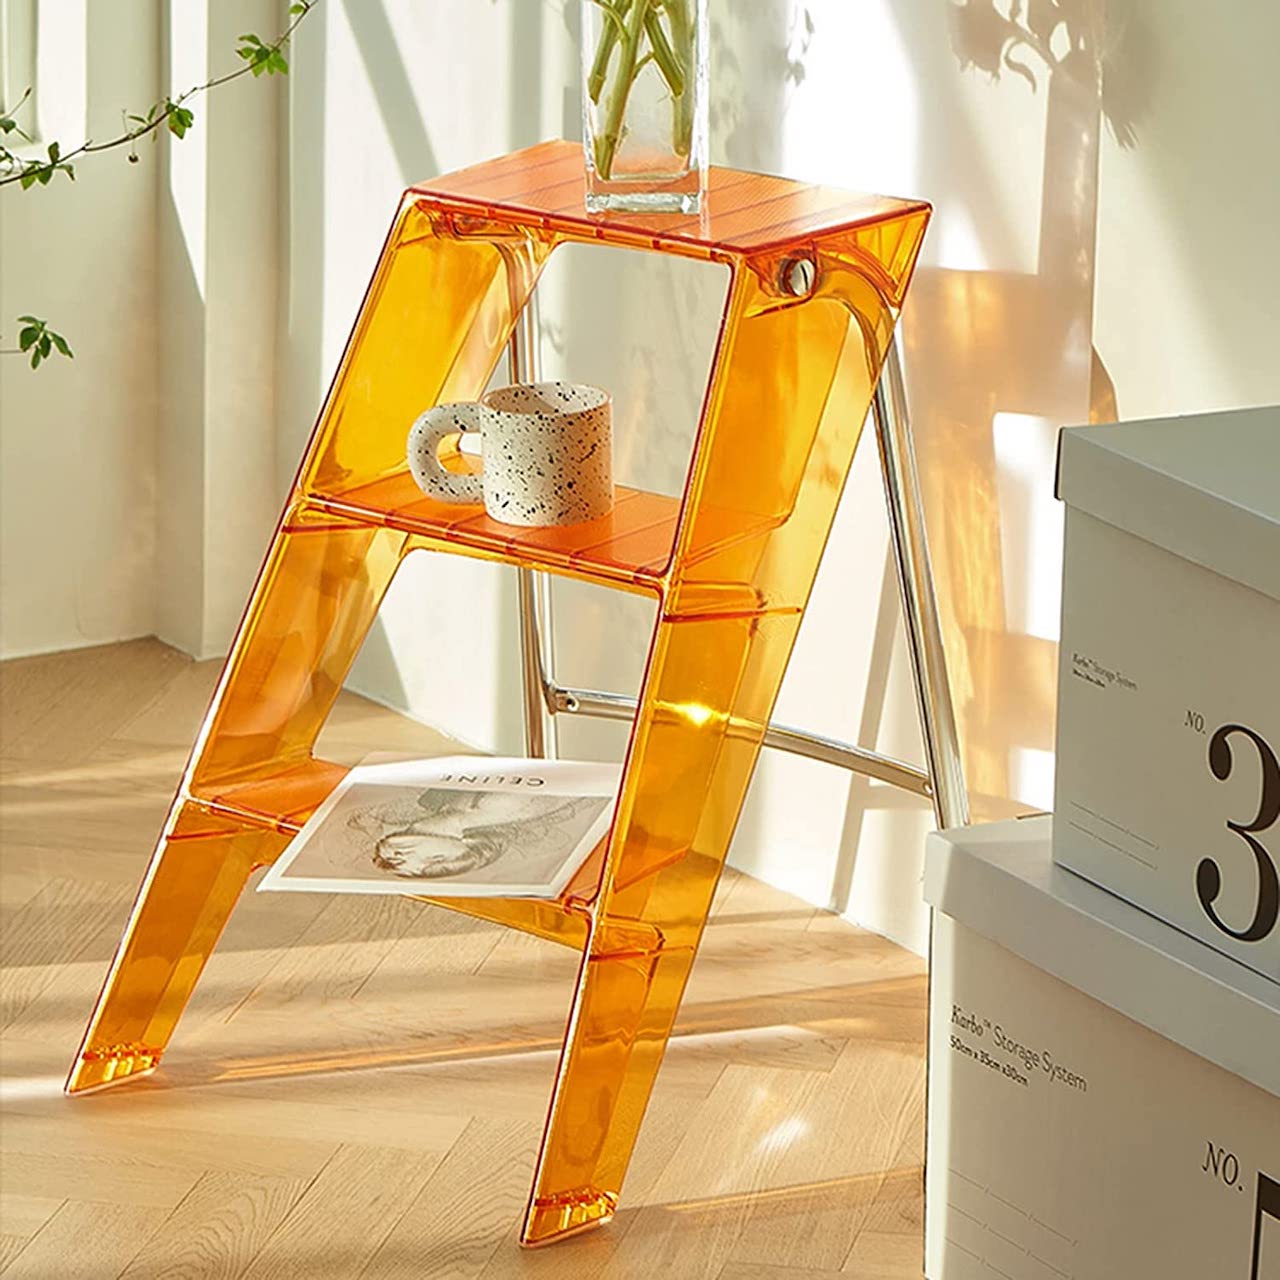 emma chamberlain house orange step ladder